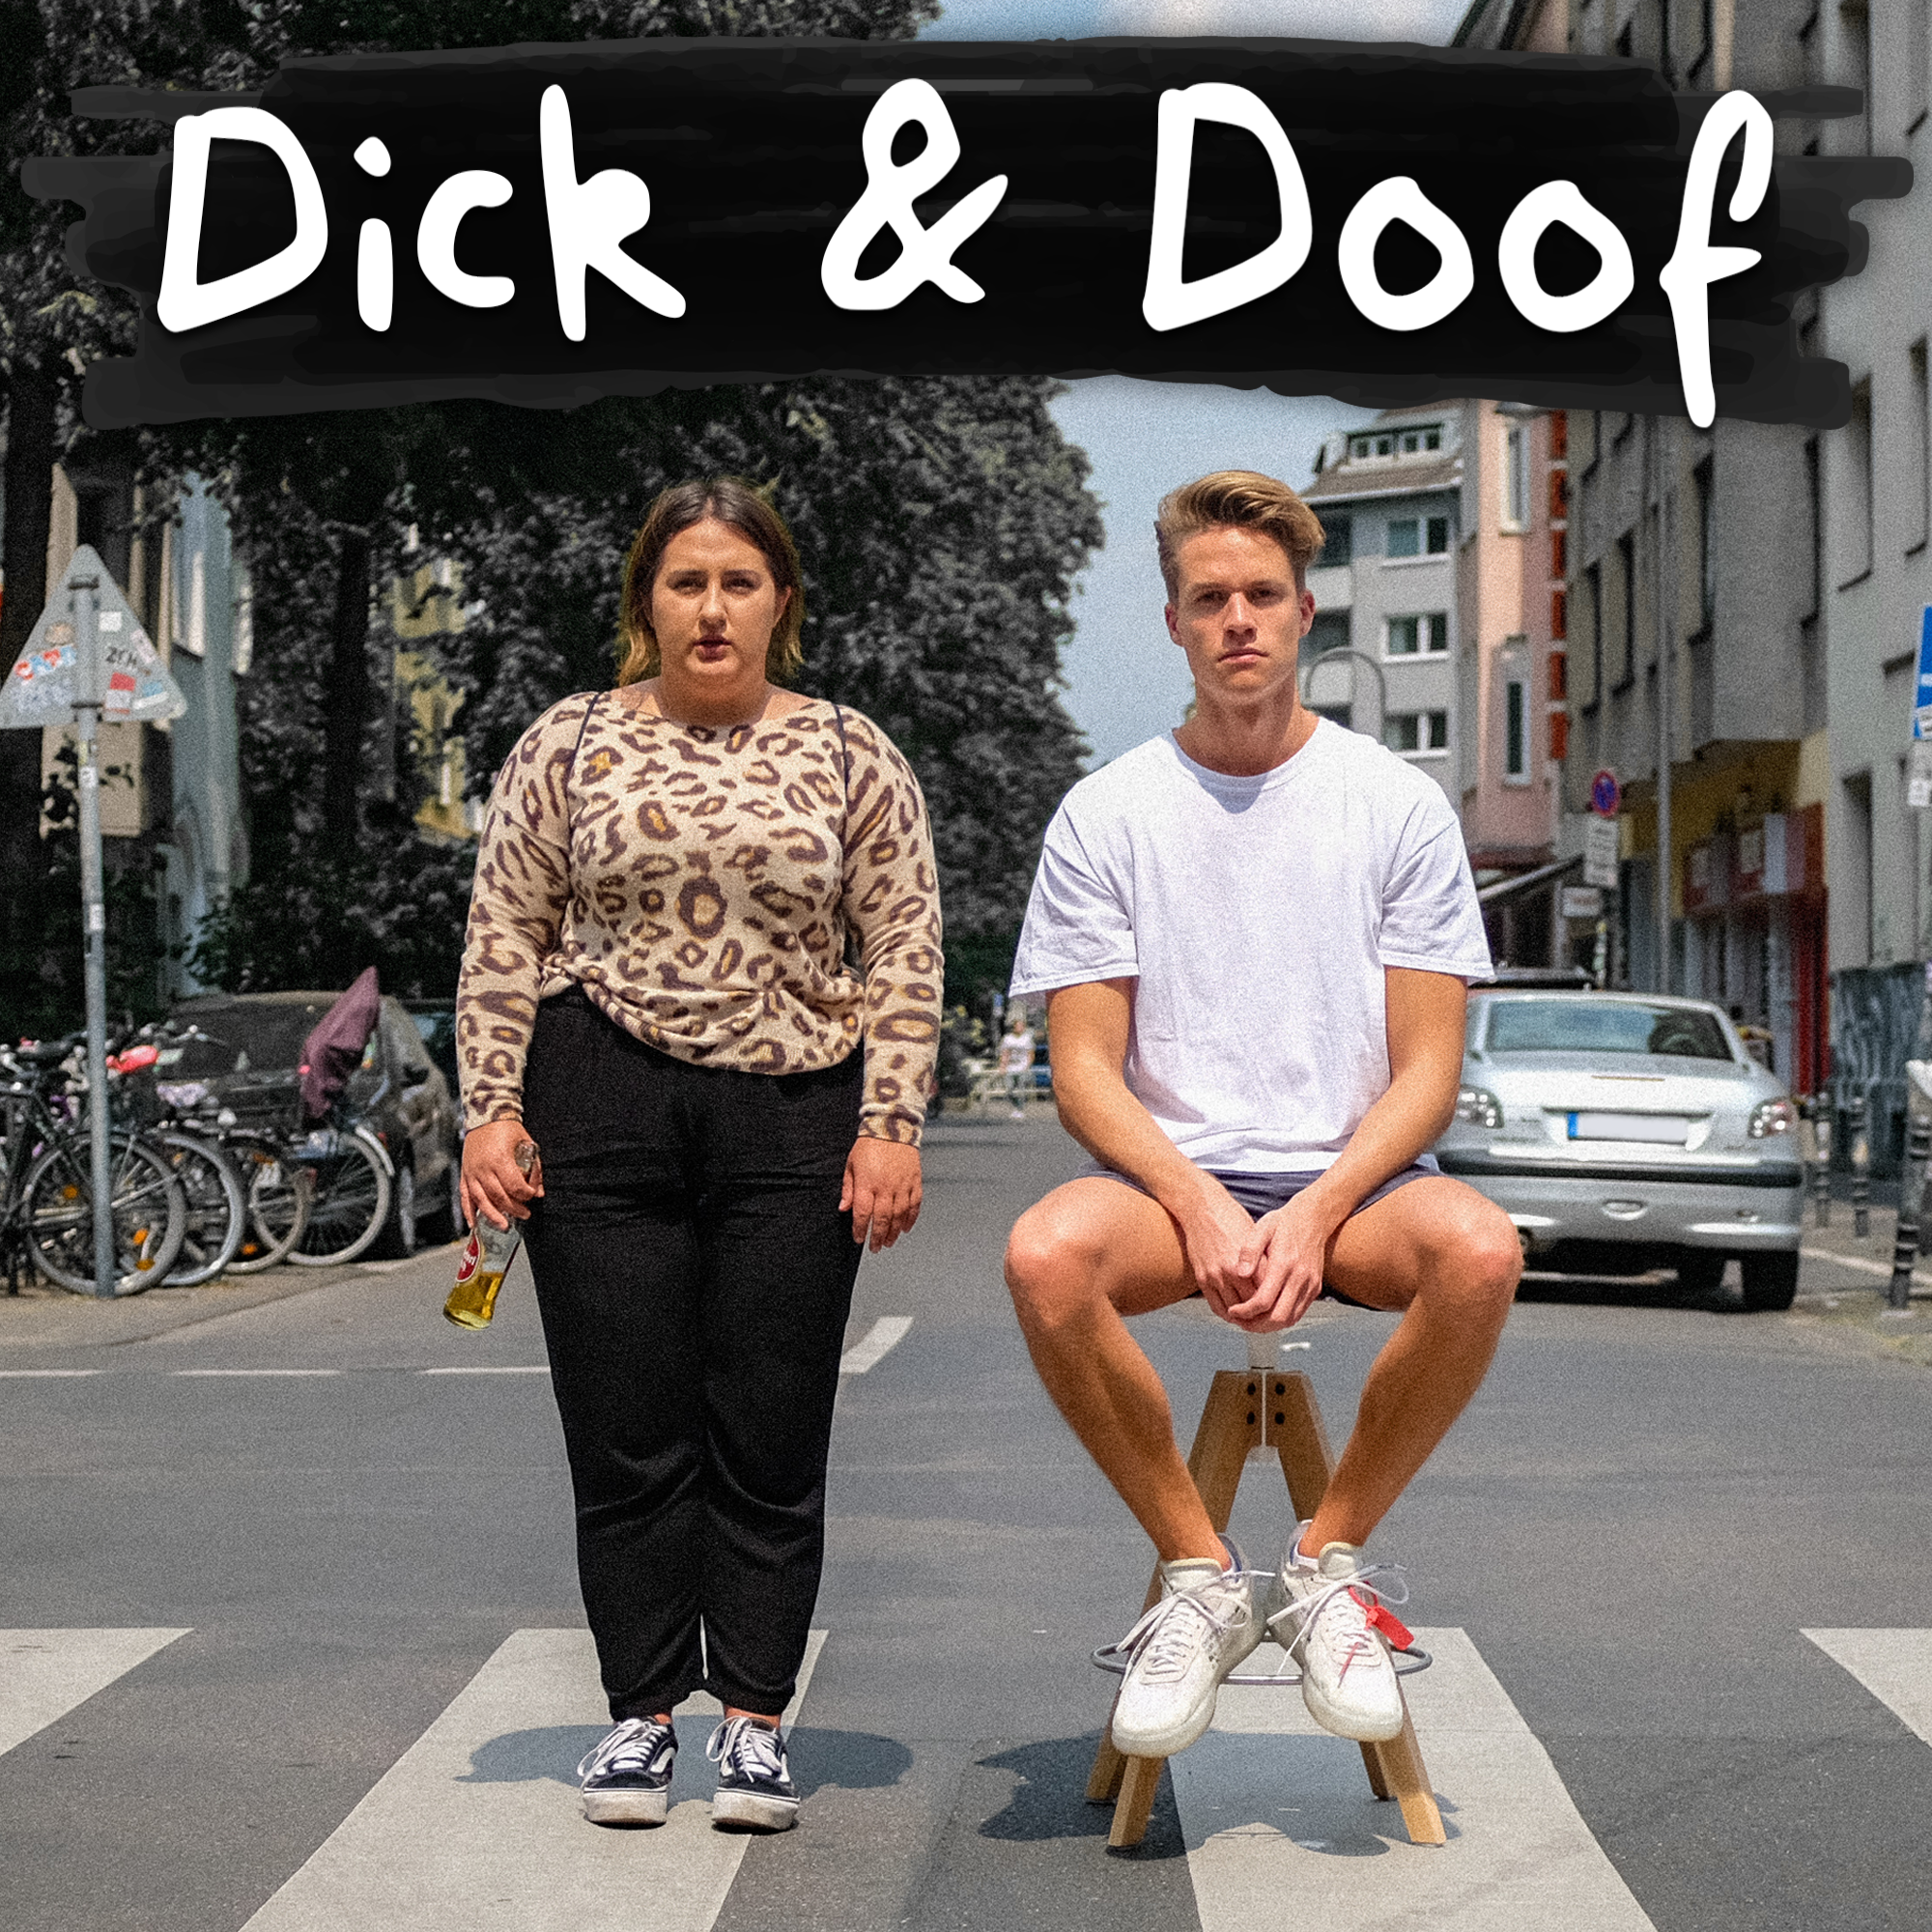 Dick & Doof logo